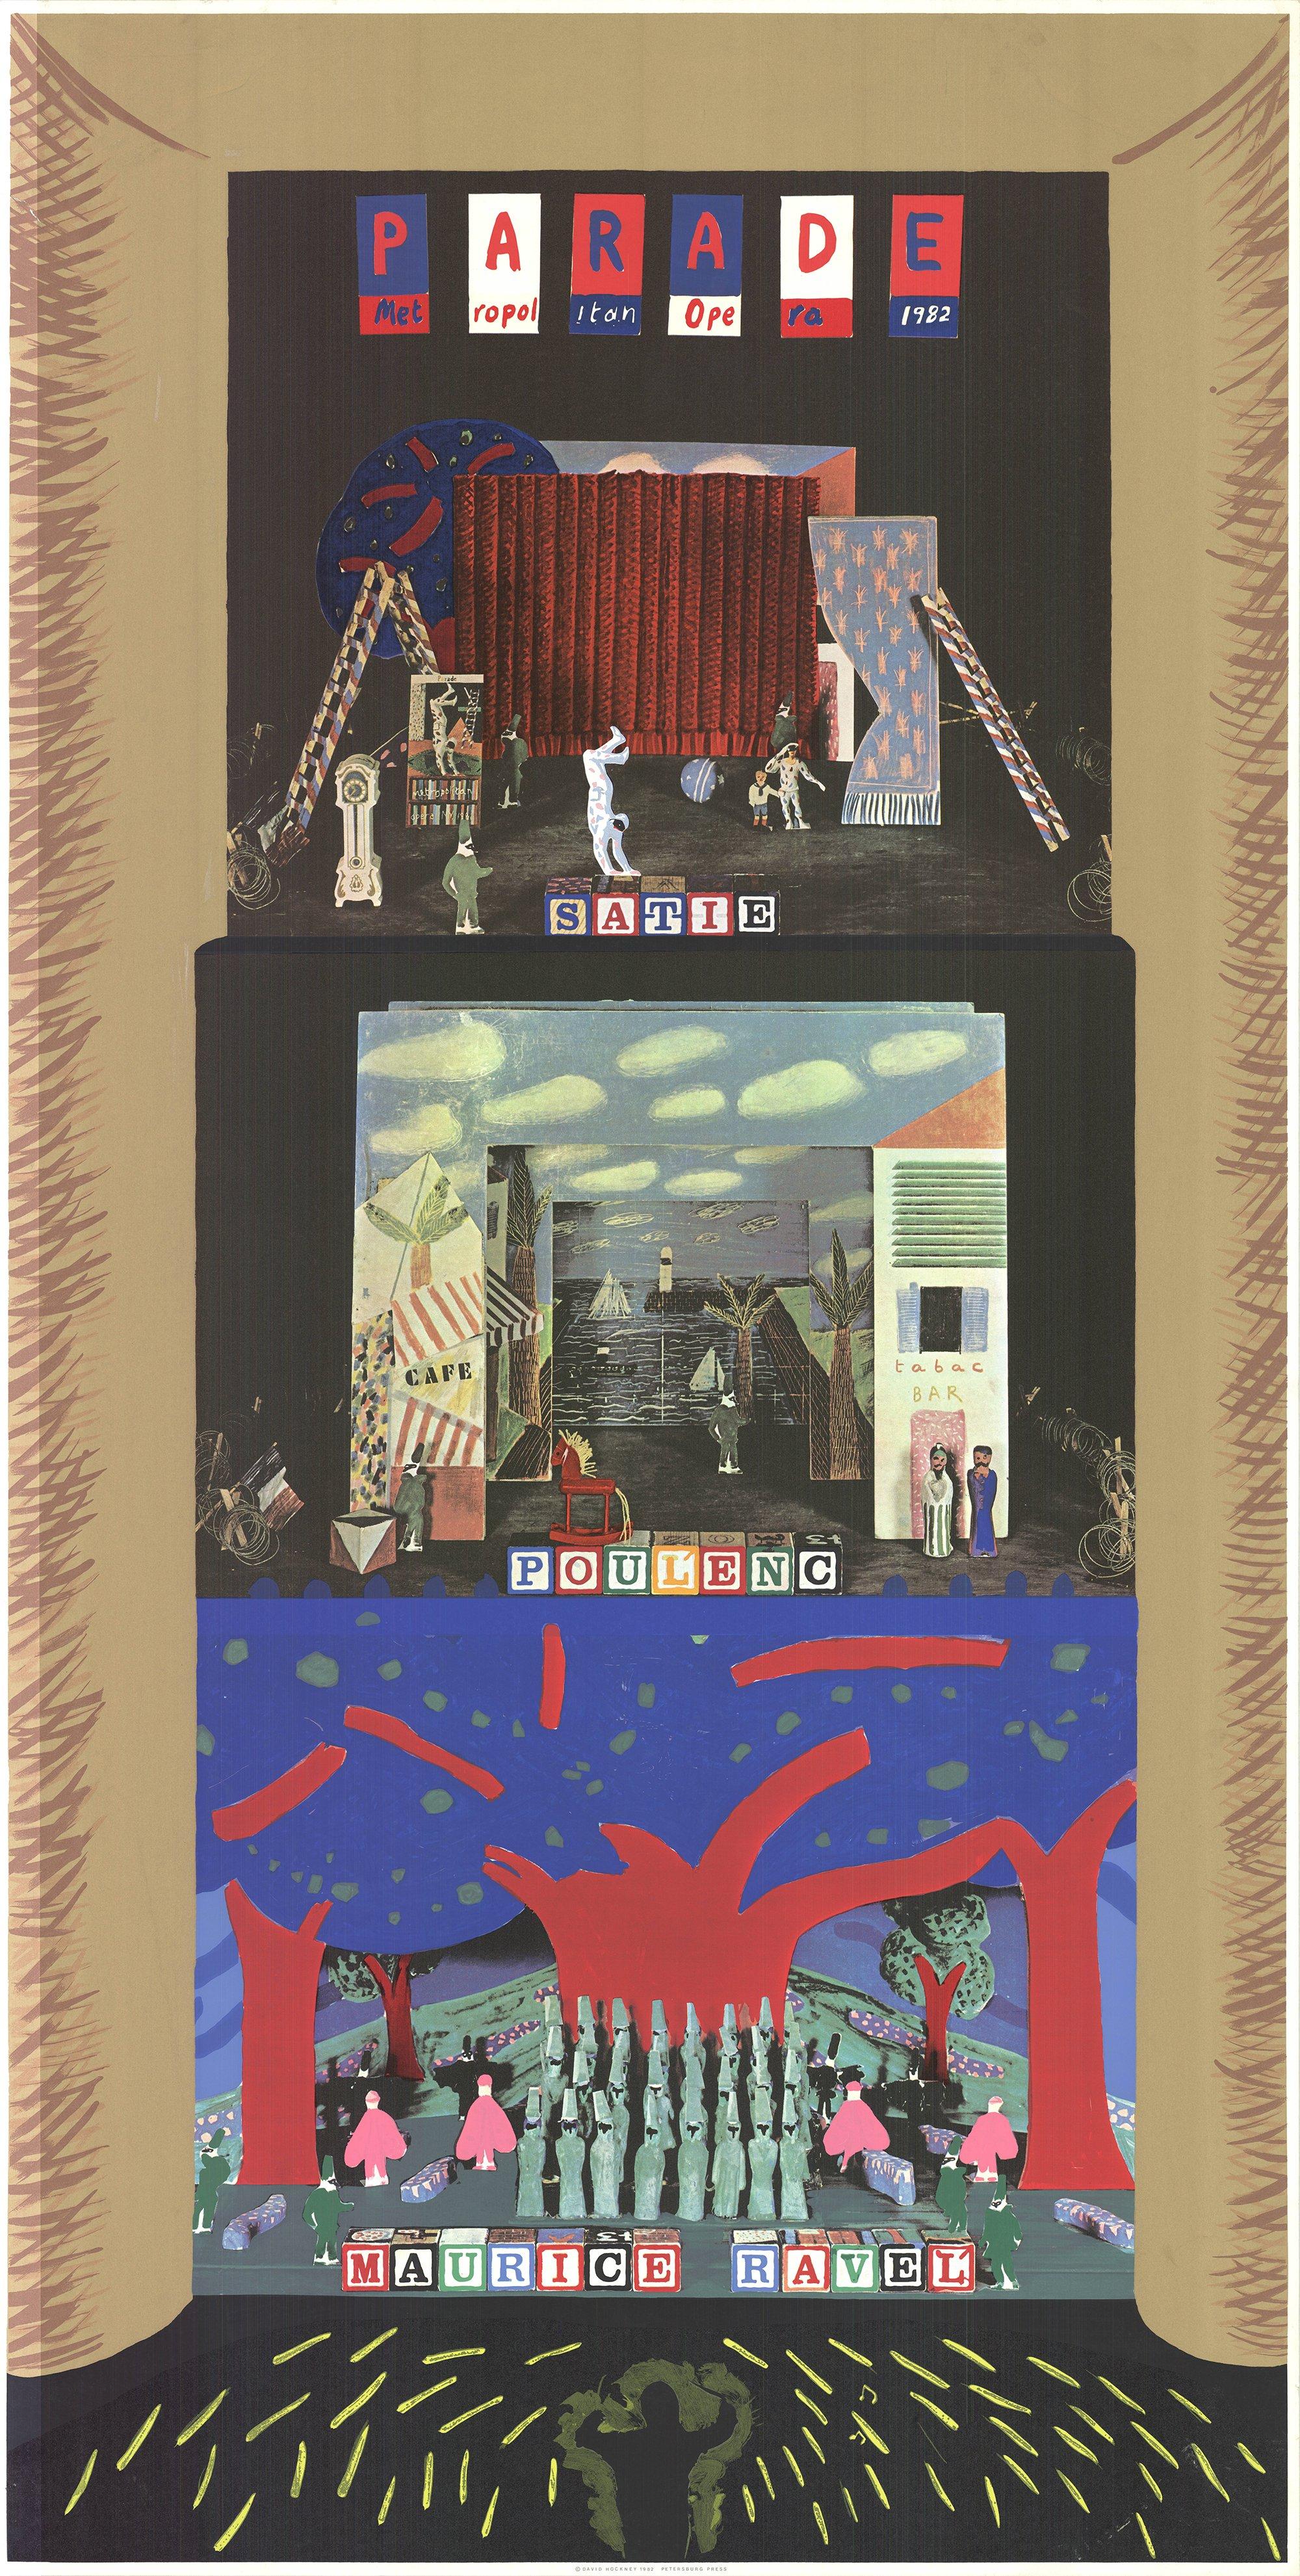 1982 David Hockney 'Parade- Metropolitan Opera' 